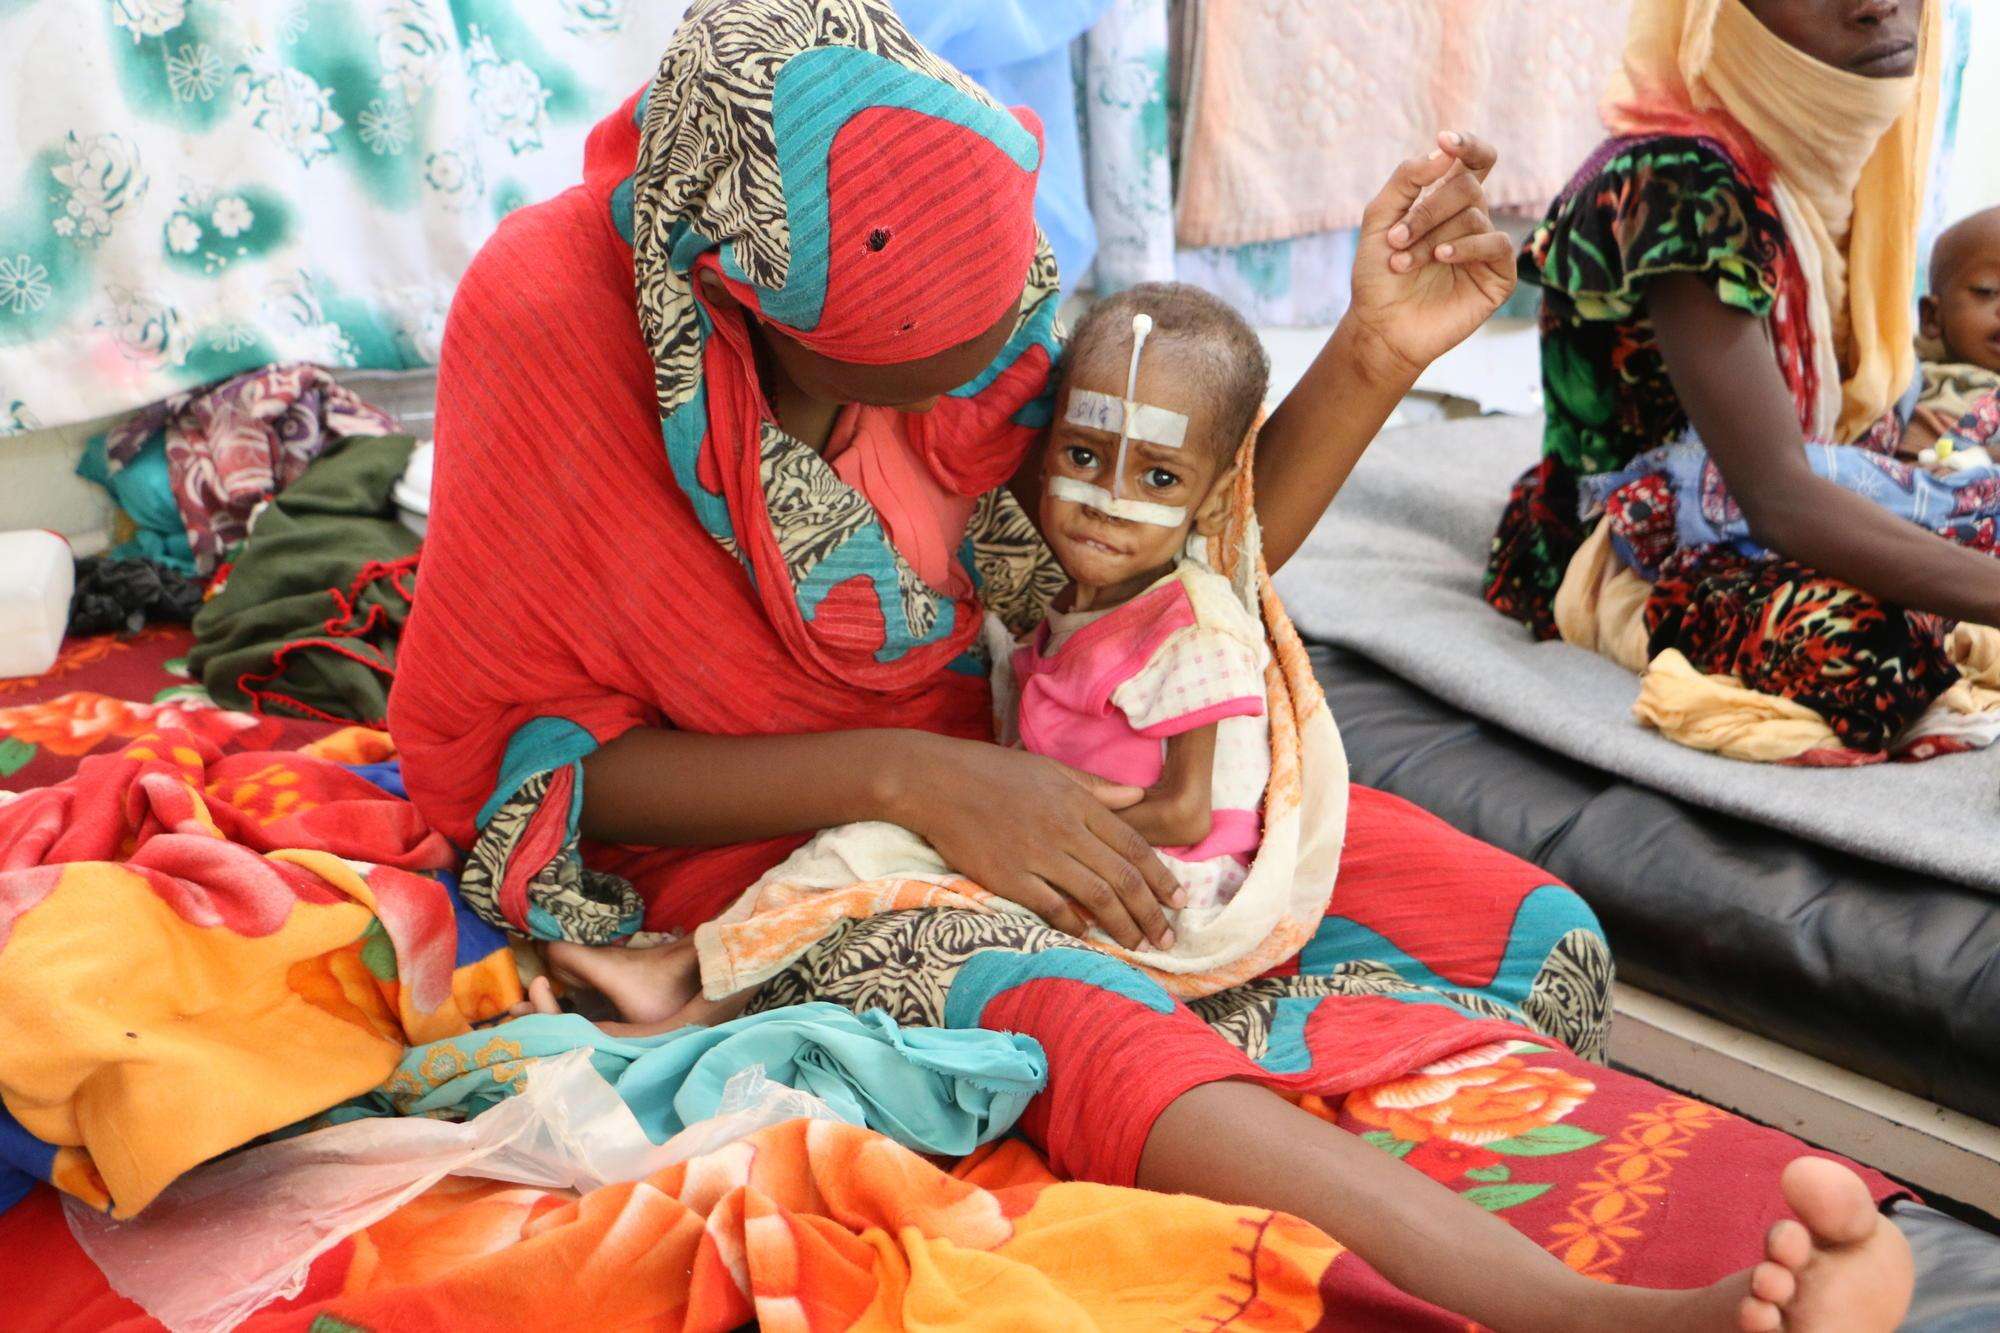 Malnutrition in Am Timan, Chad